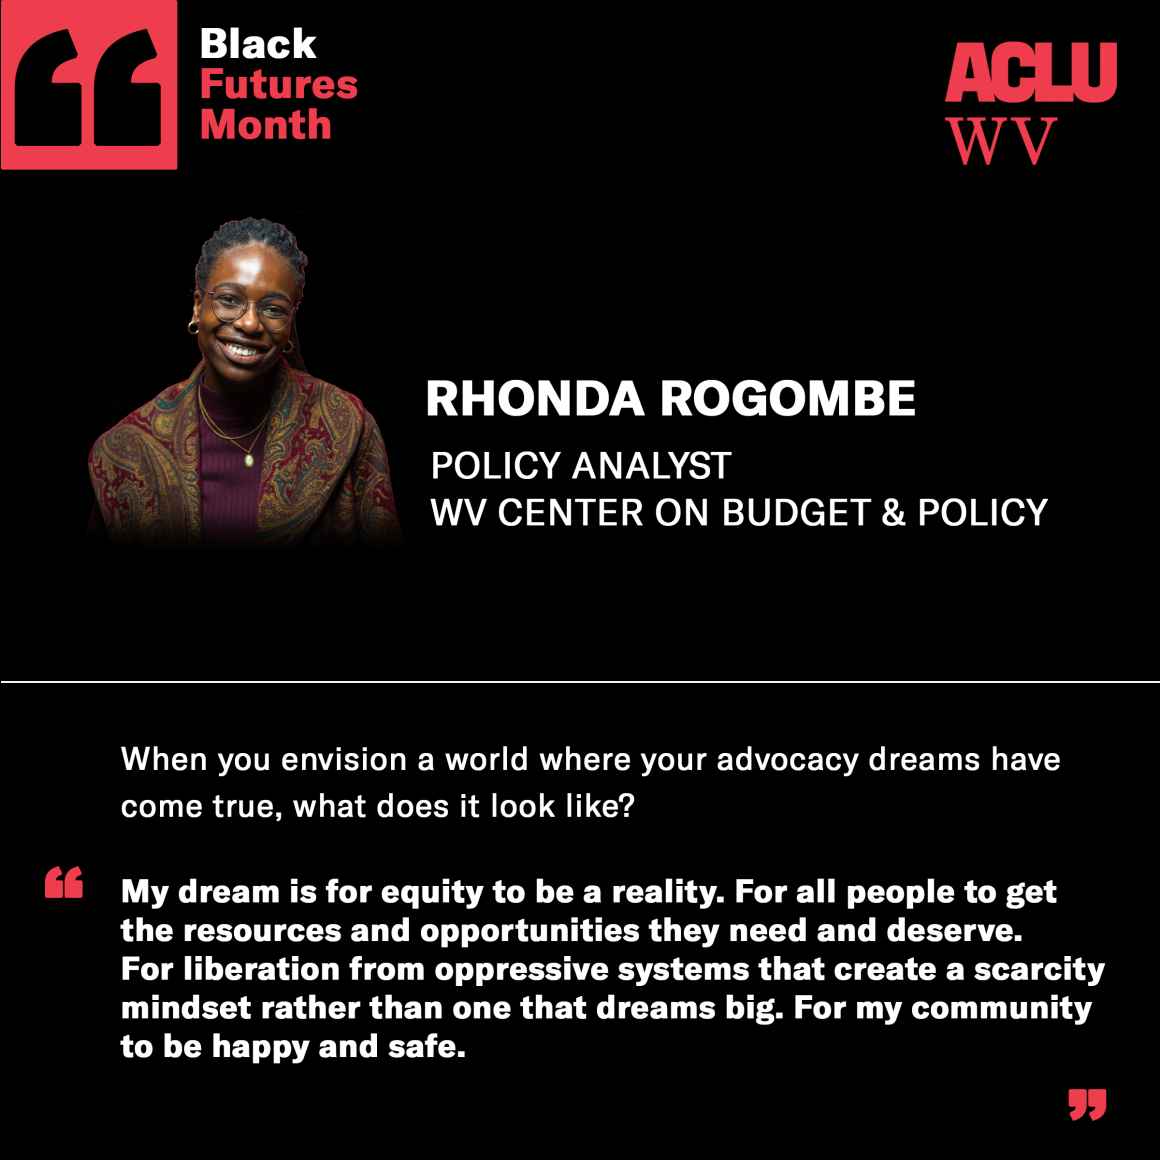 Image of Rhonda Rogombe on a black background